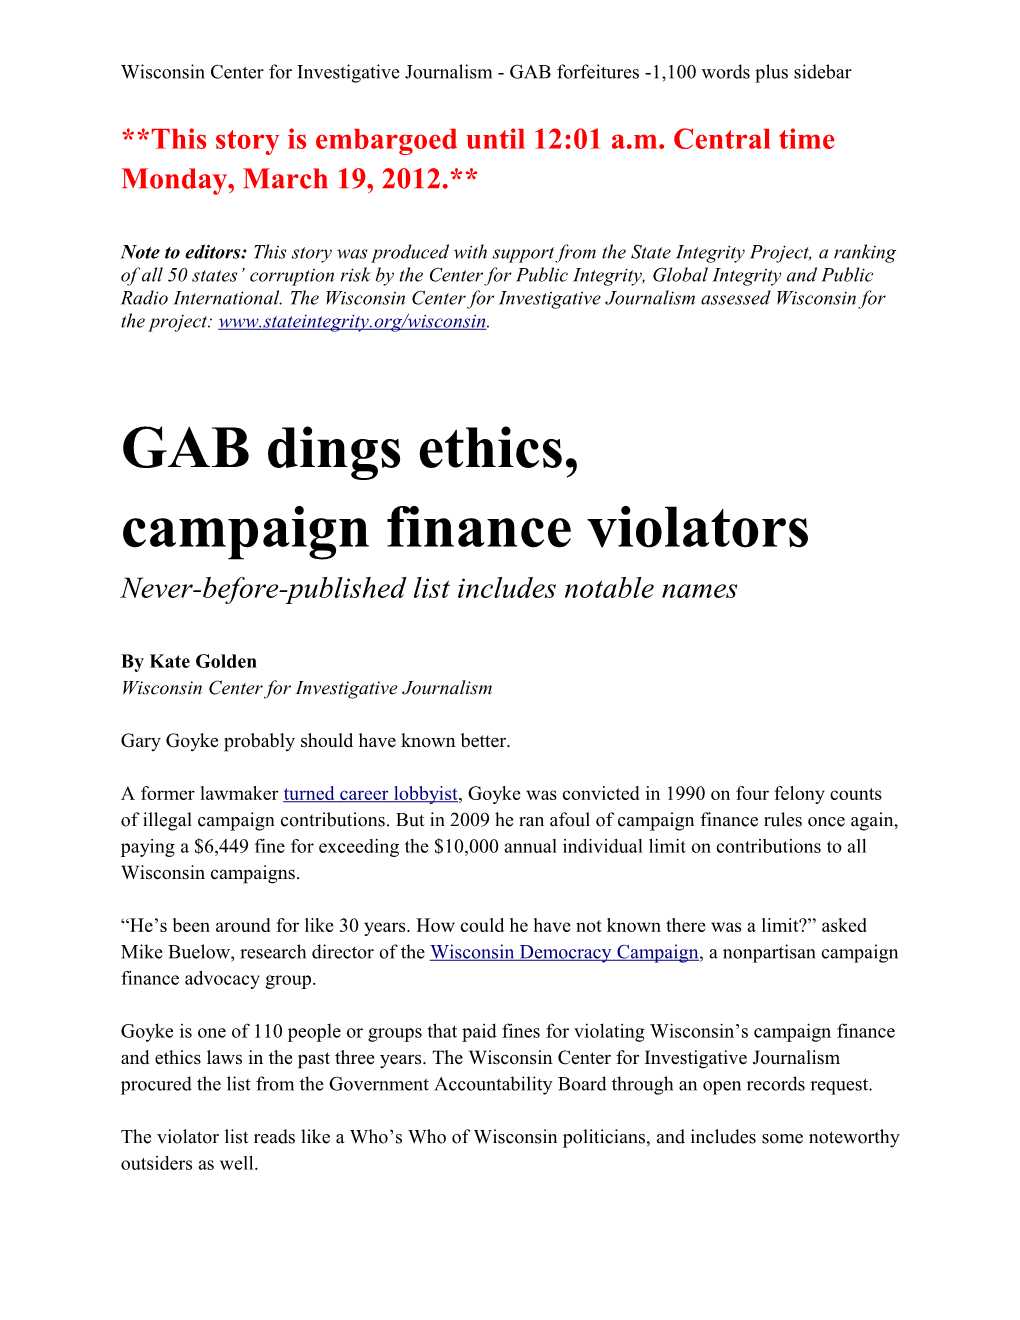 Wisconsin Center for Investigative Journalism - GAB Forfeitures -1,100 Words Plus Sidebar